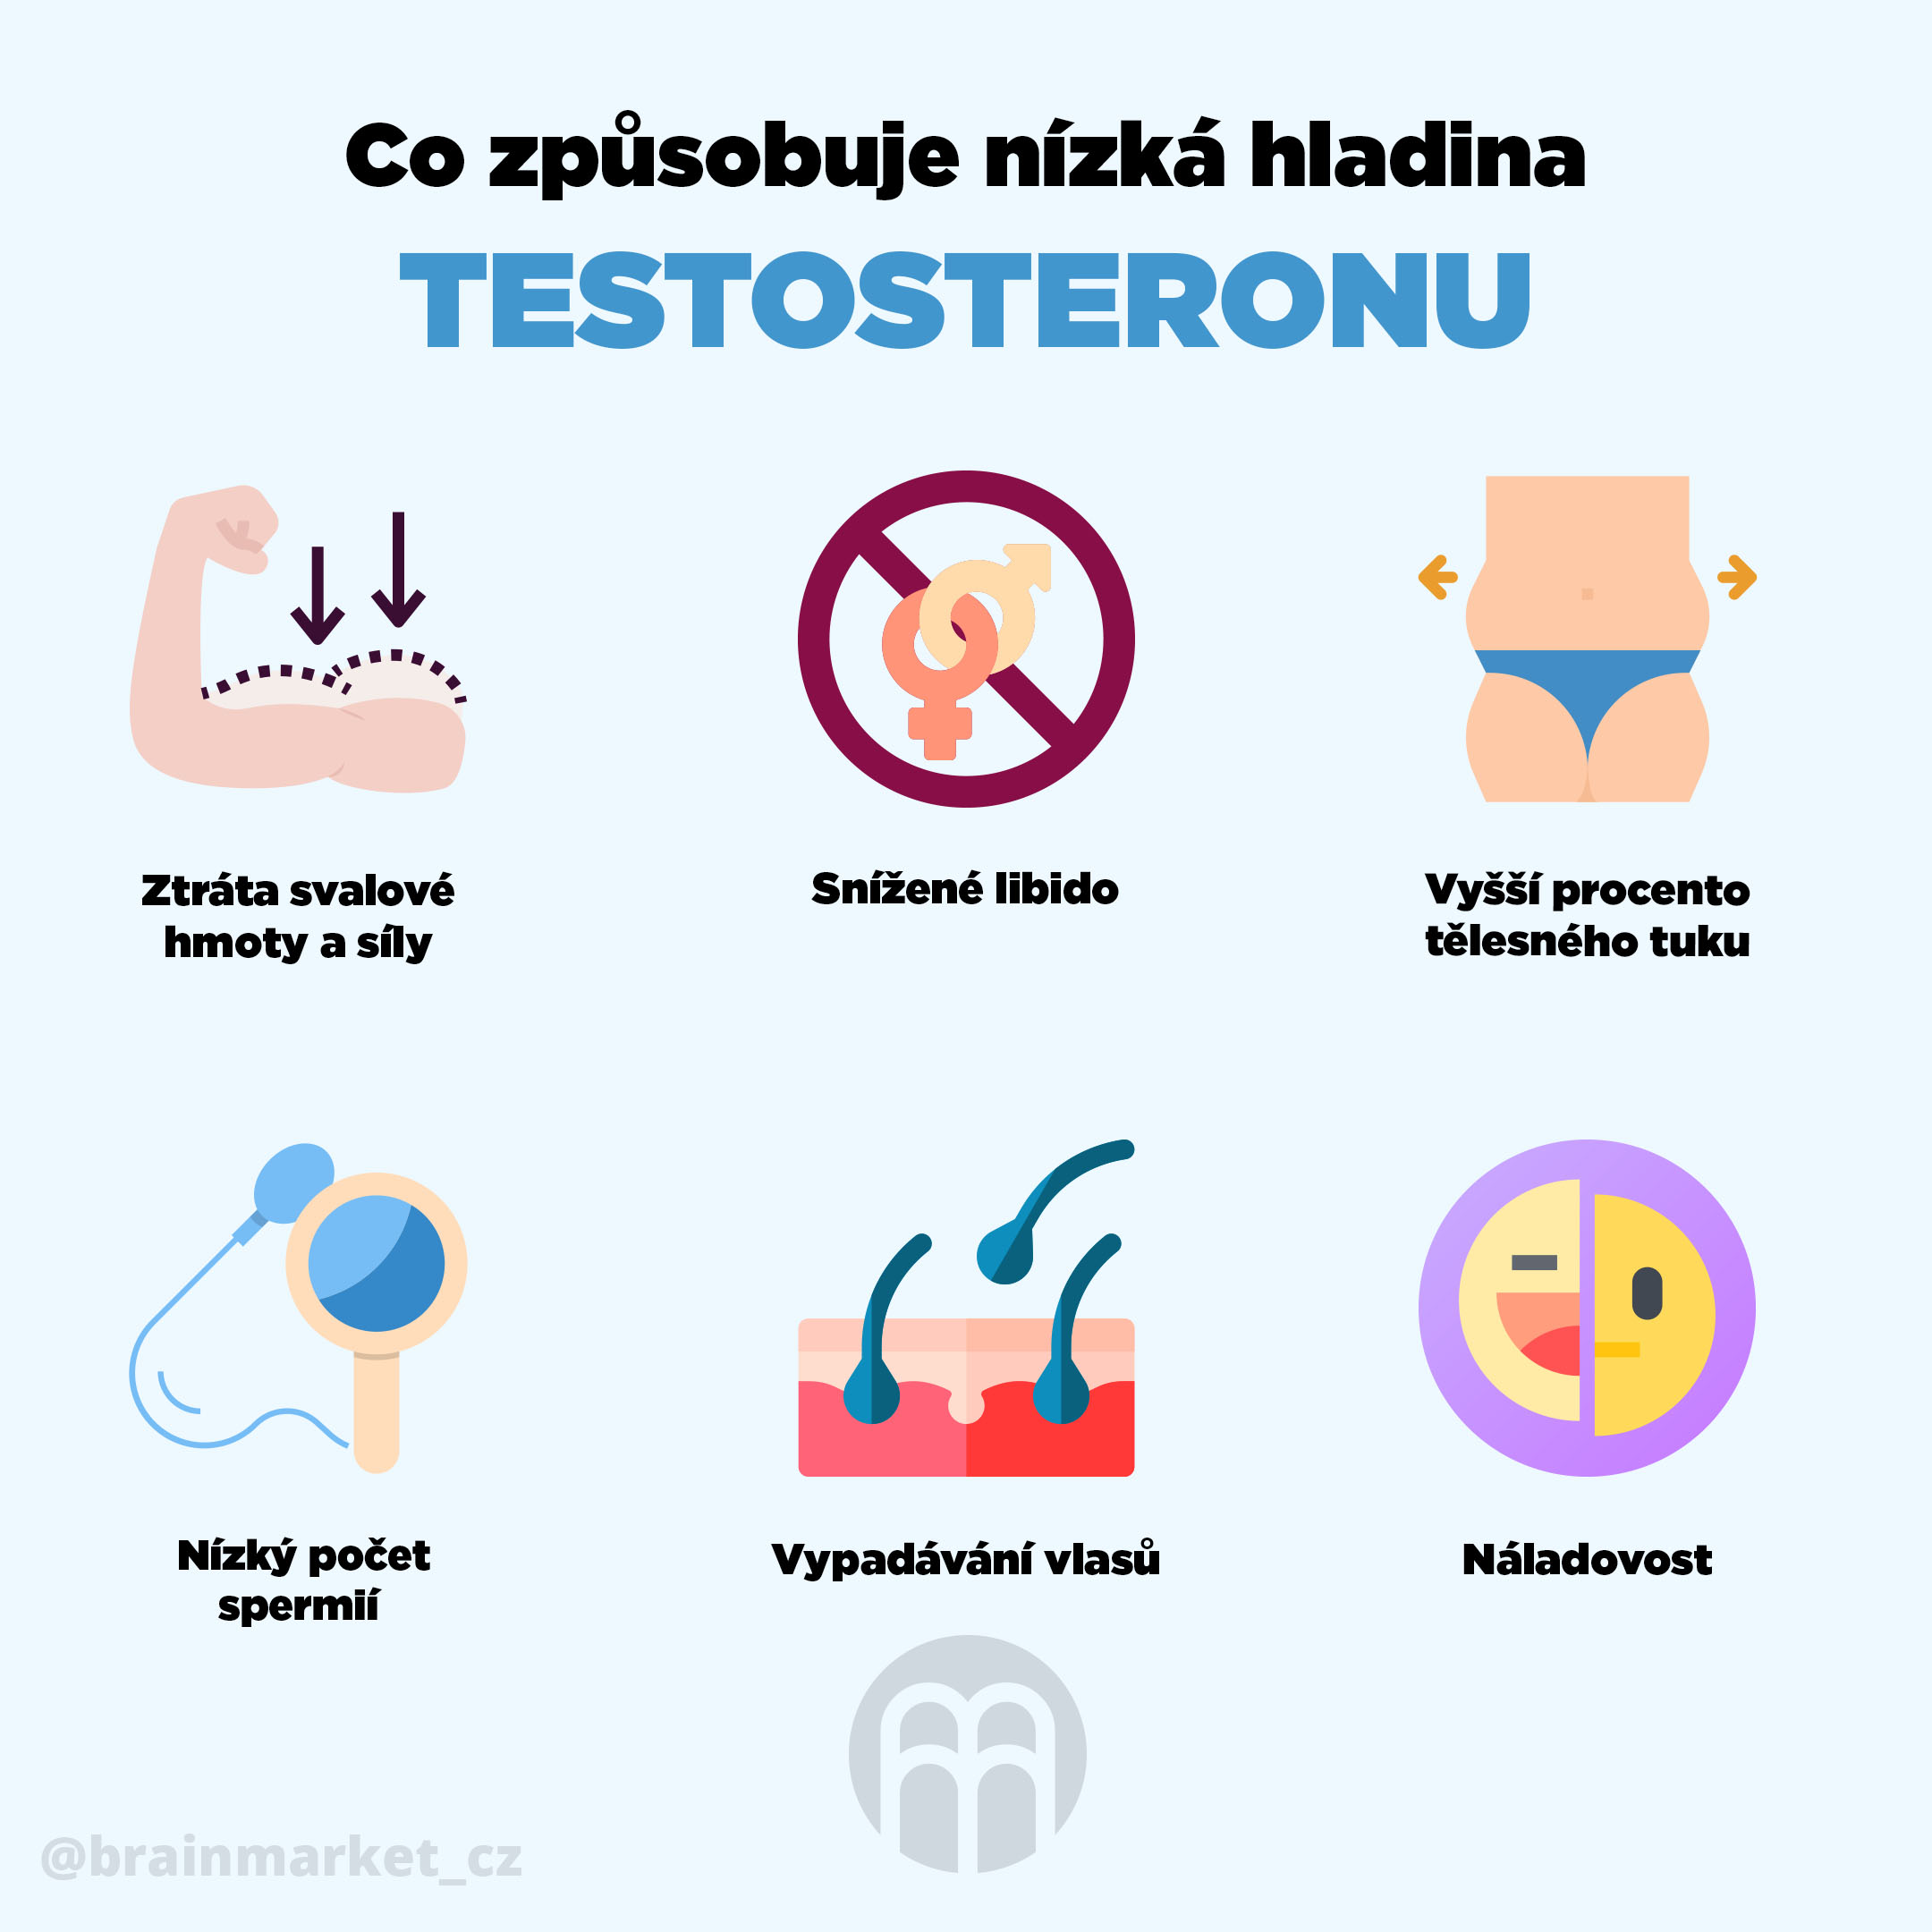 nizka_hladina_testosteronu_brainmarket_infografika_cz